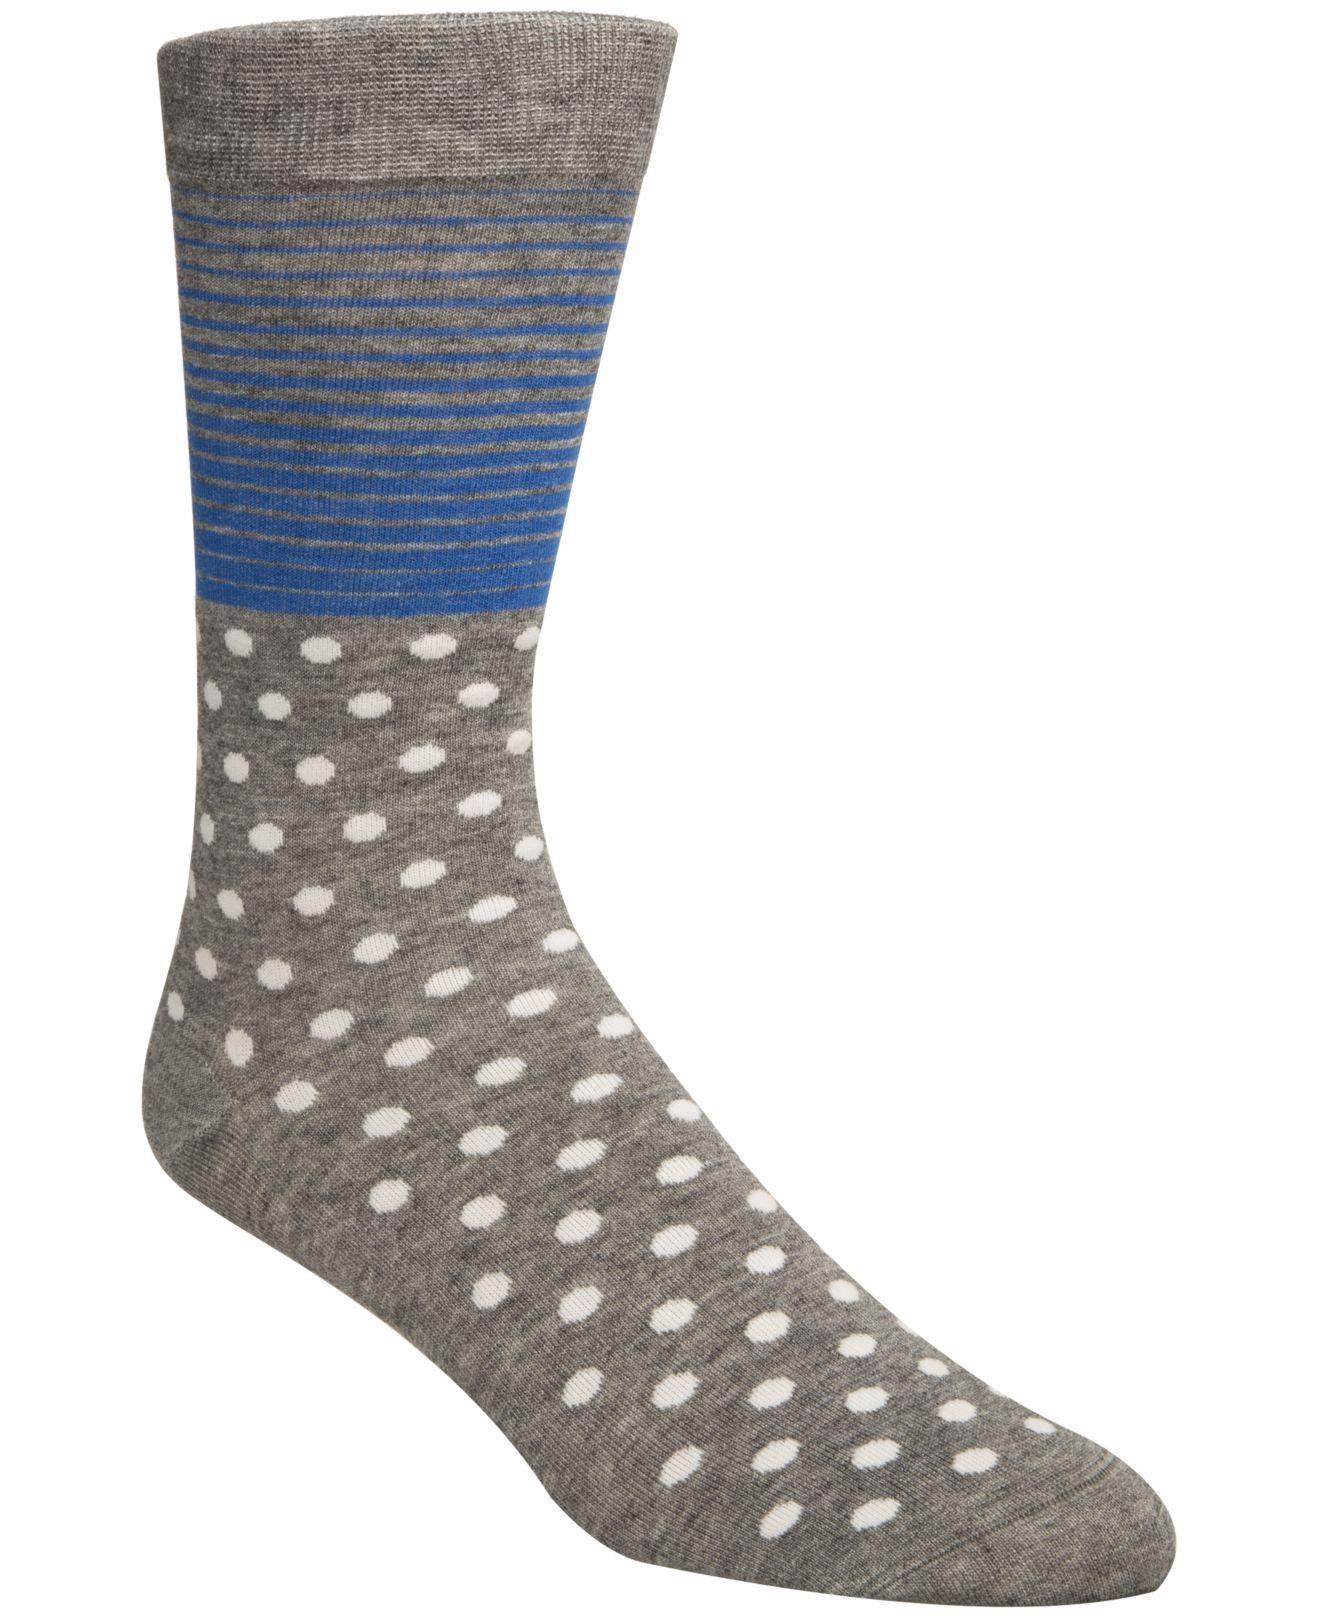 Lyst - Cole Haan Printed Crew Socks in Gray for Men